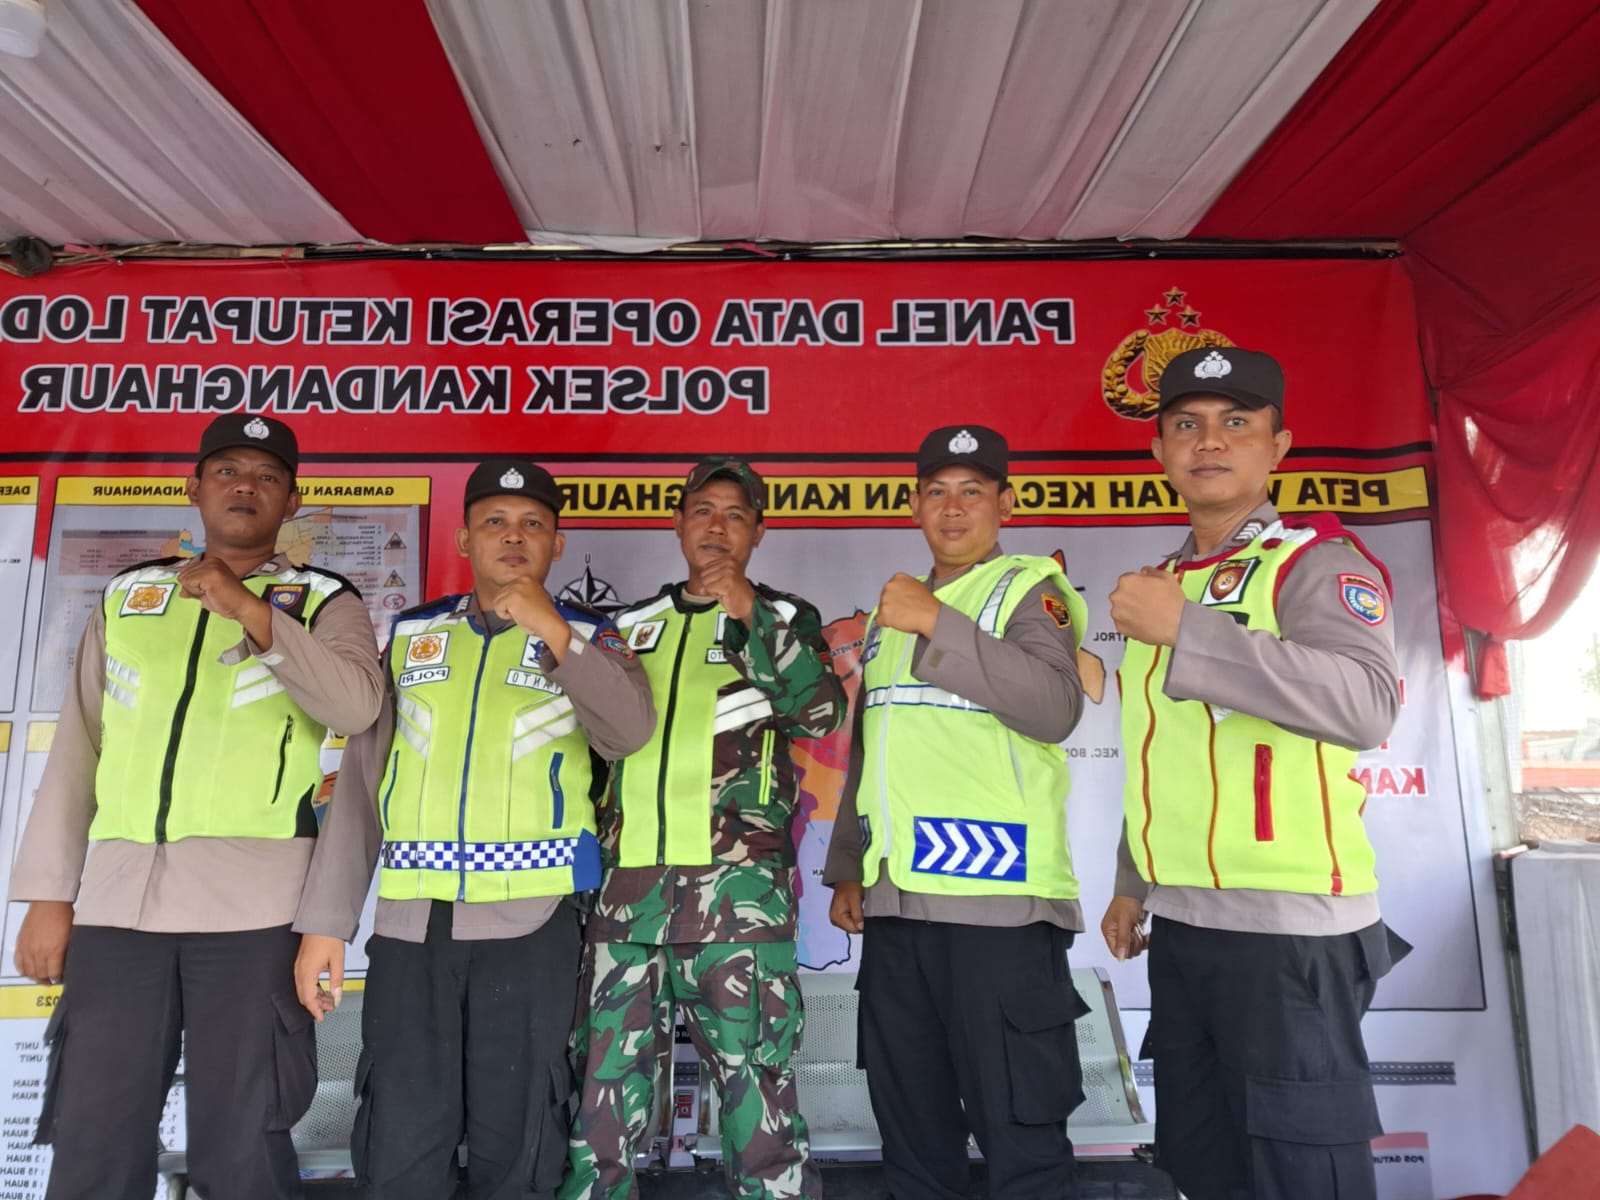 Personil TNI-Polri di Indramayu Terus Bersinergi Lakukan Pengamanan di Pos Pam Lebaran